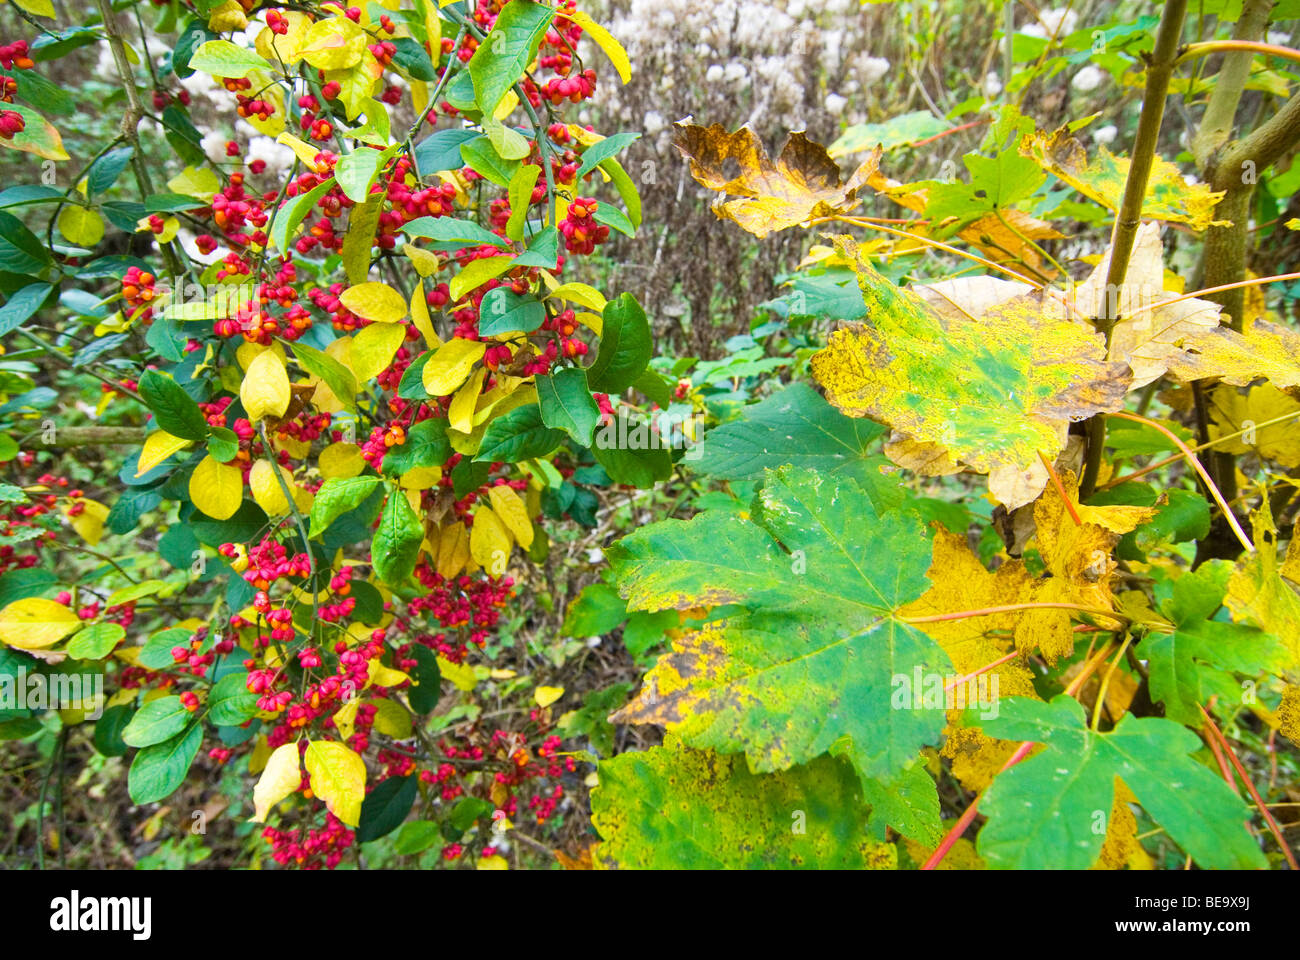 wilde kardinaalsmuts in herfstig duinstruweel; european spindle in dune thicket with autumn colours Stock Photo